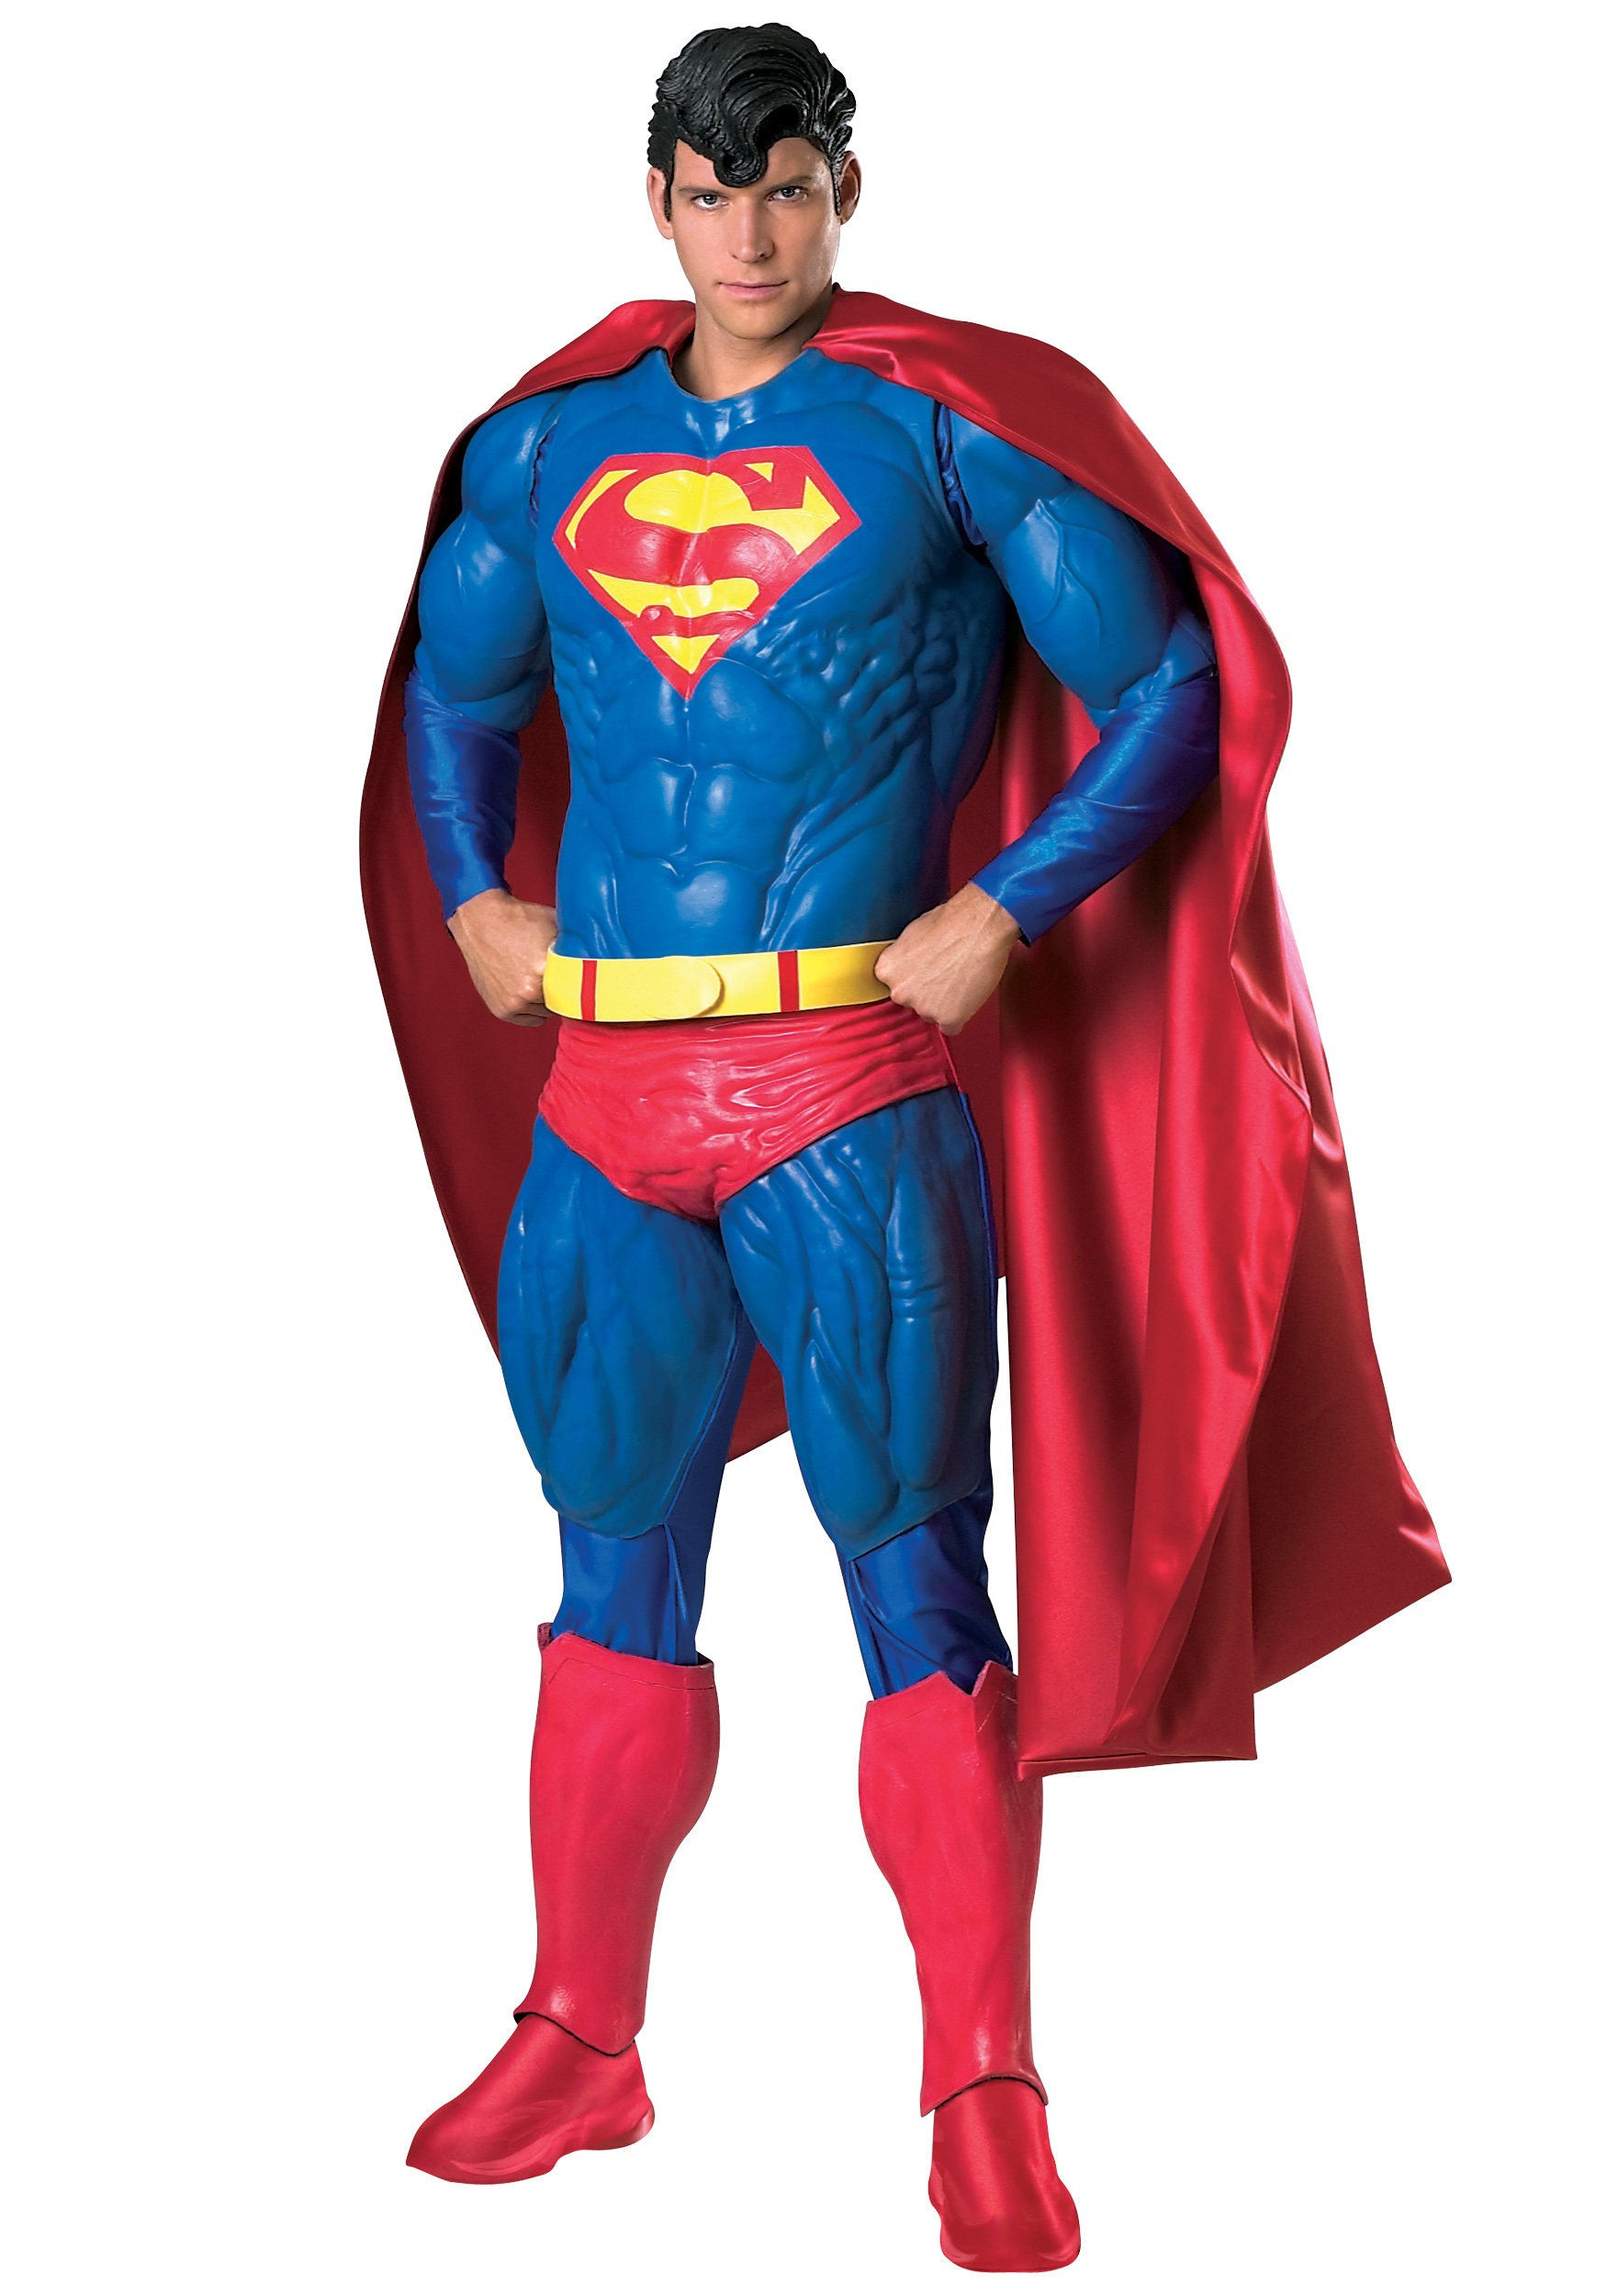 Realistic superman costume